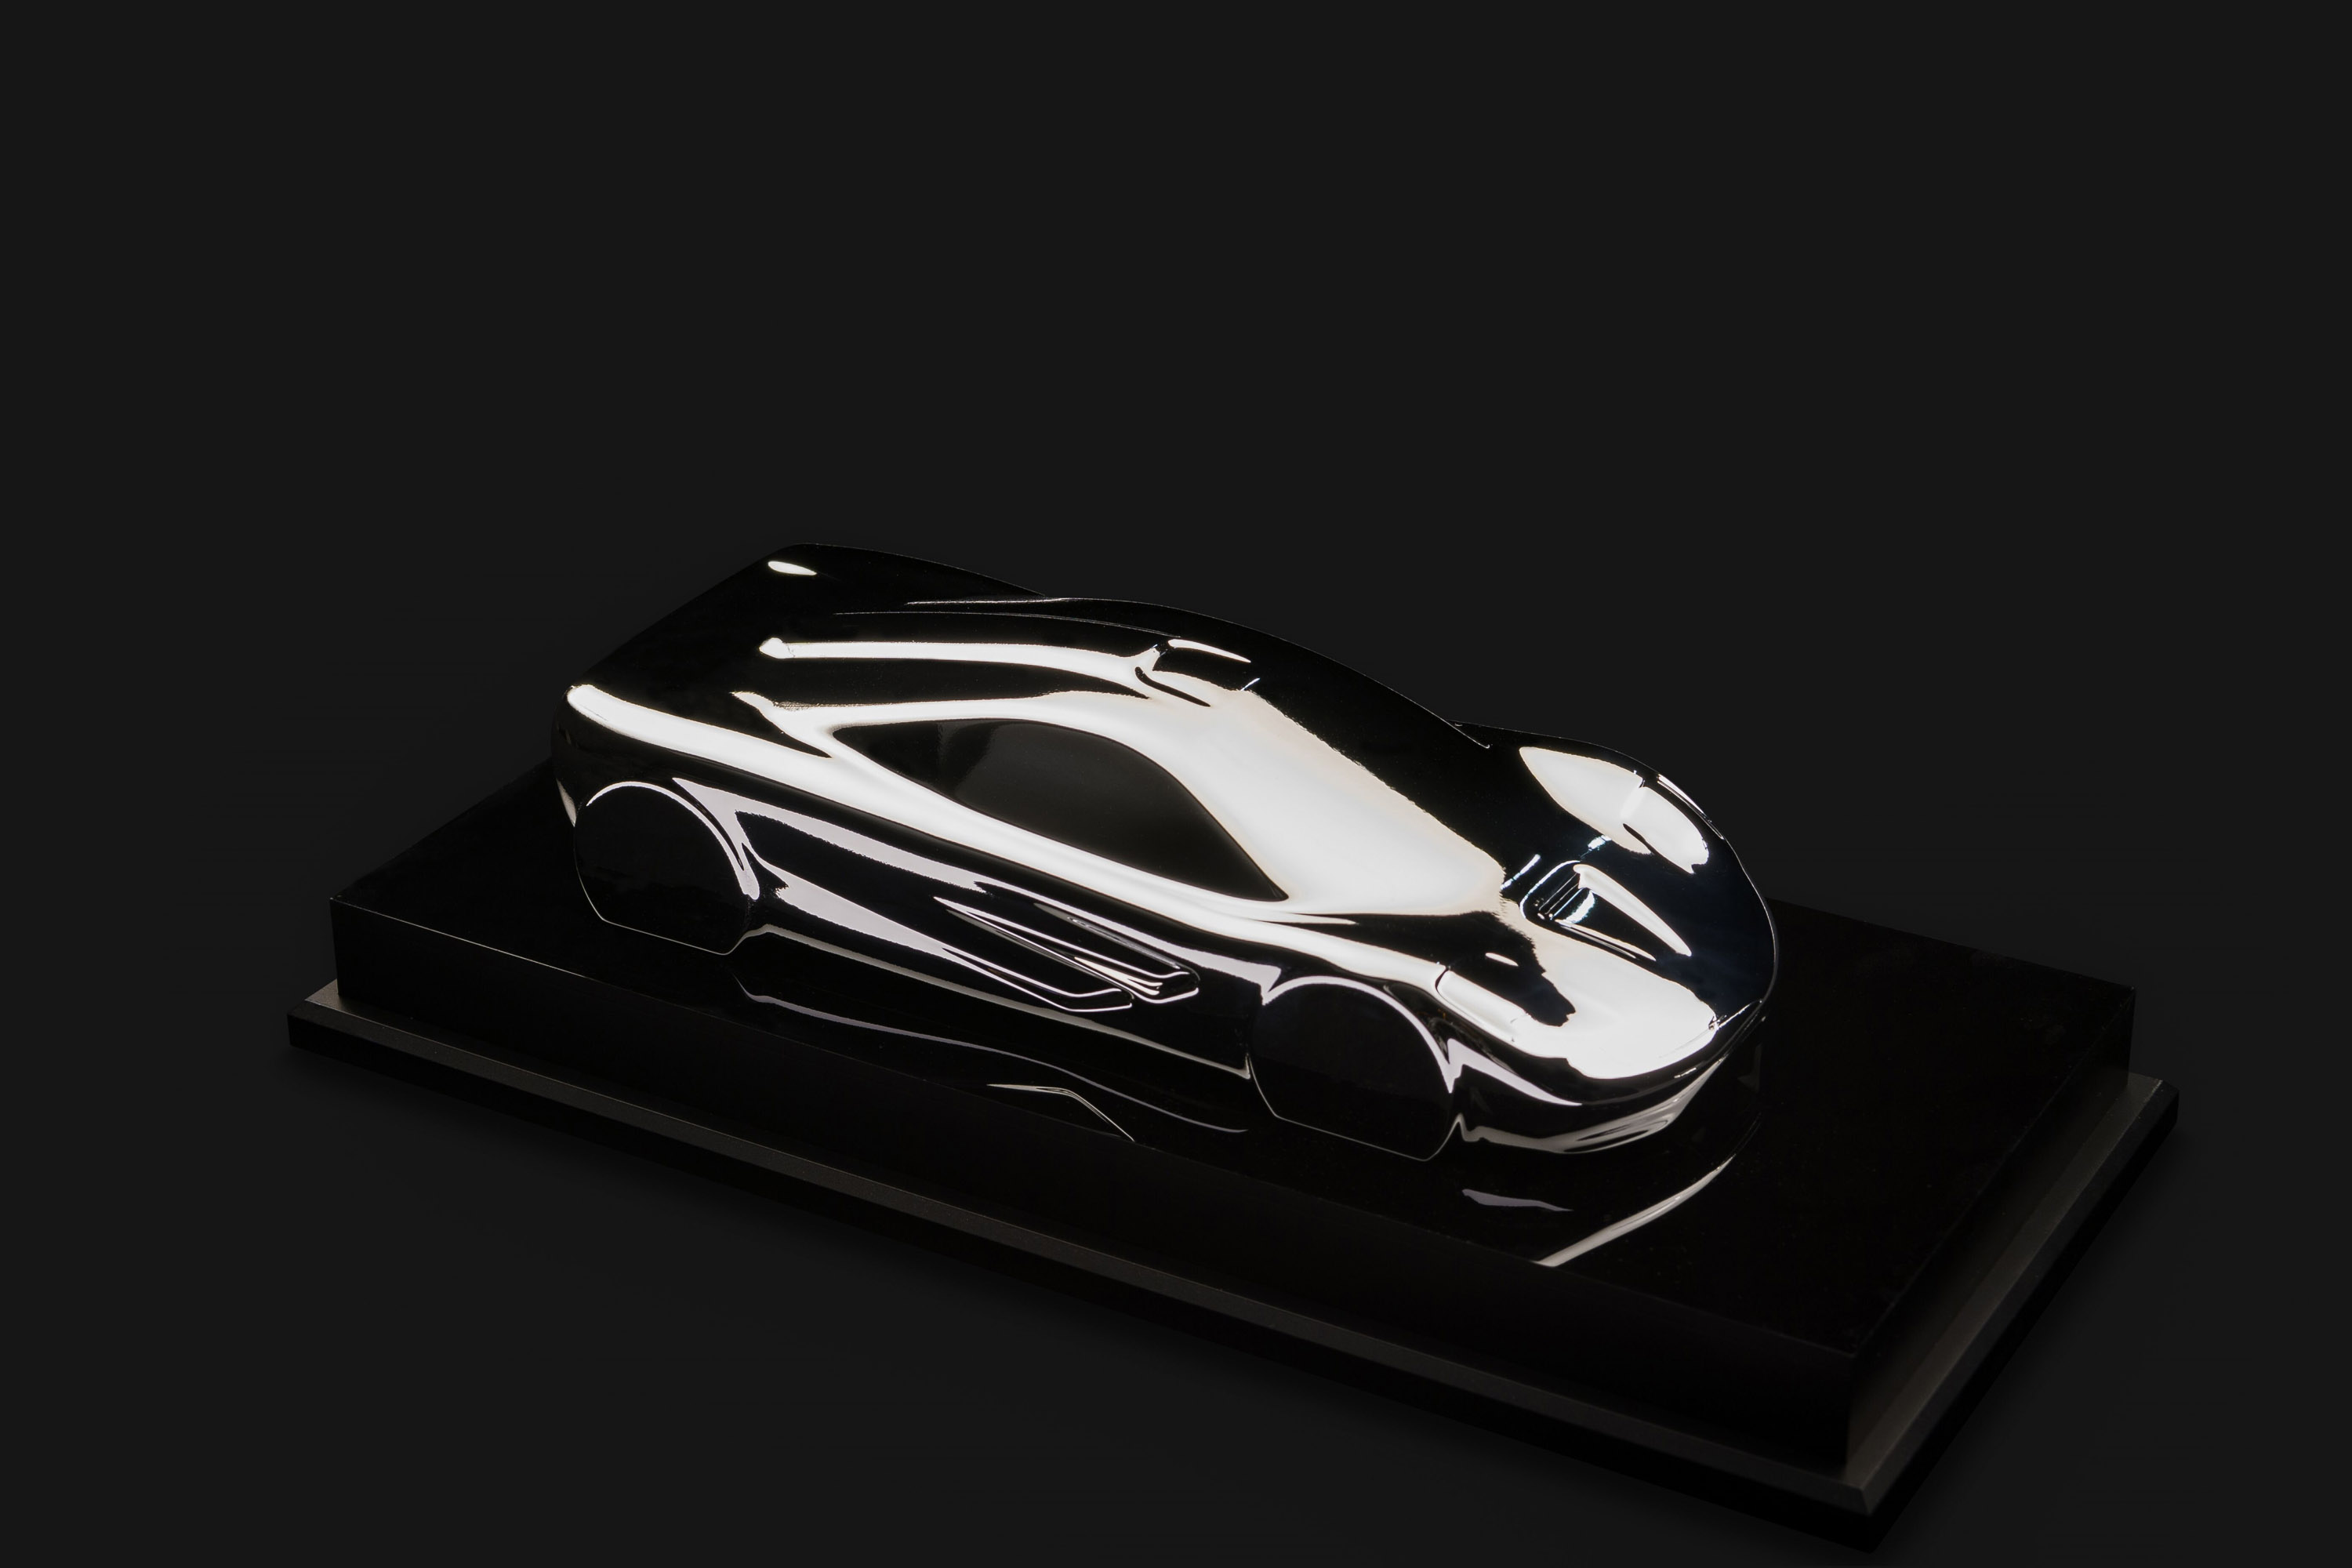 McLaren F1 Chassis 063